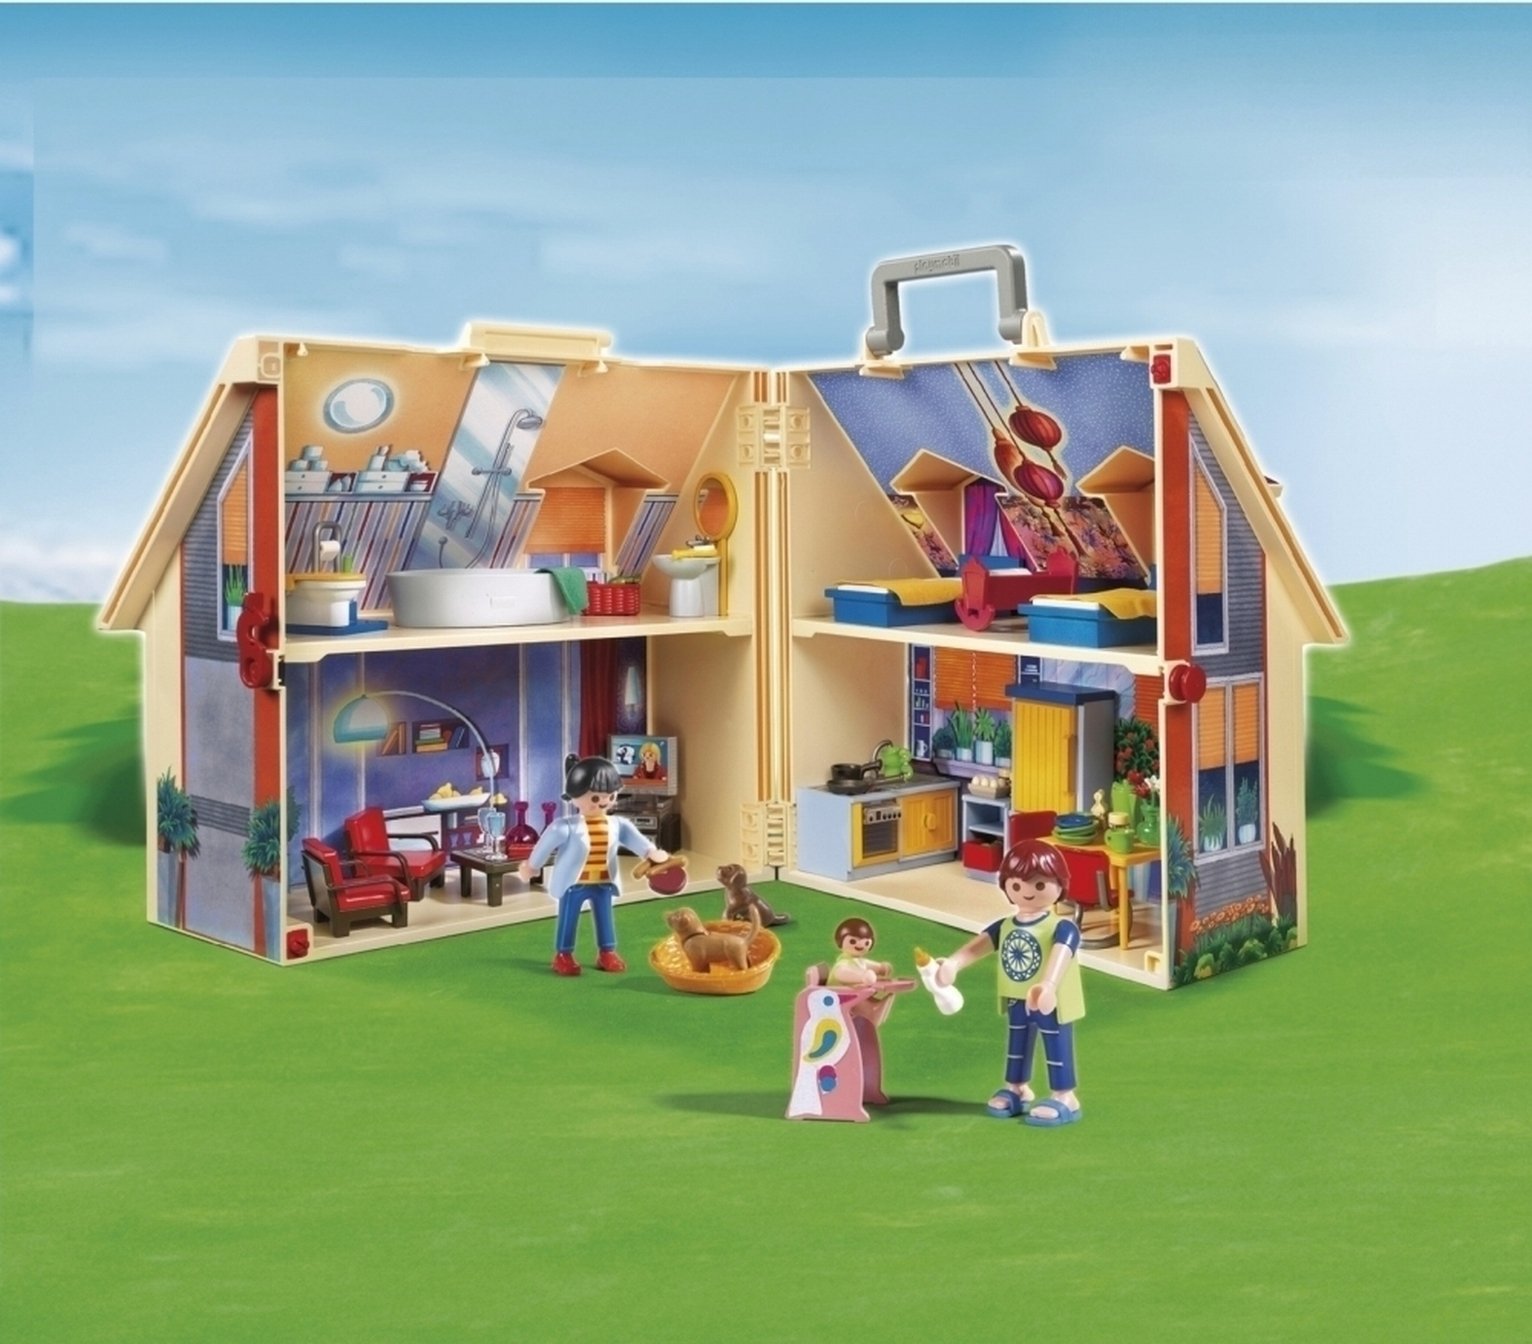 Playmobil 5167 Take Along Dolls House Playset Review